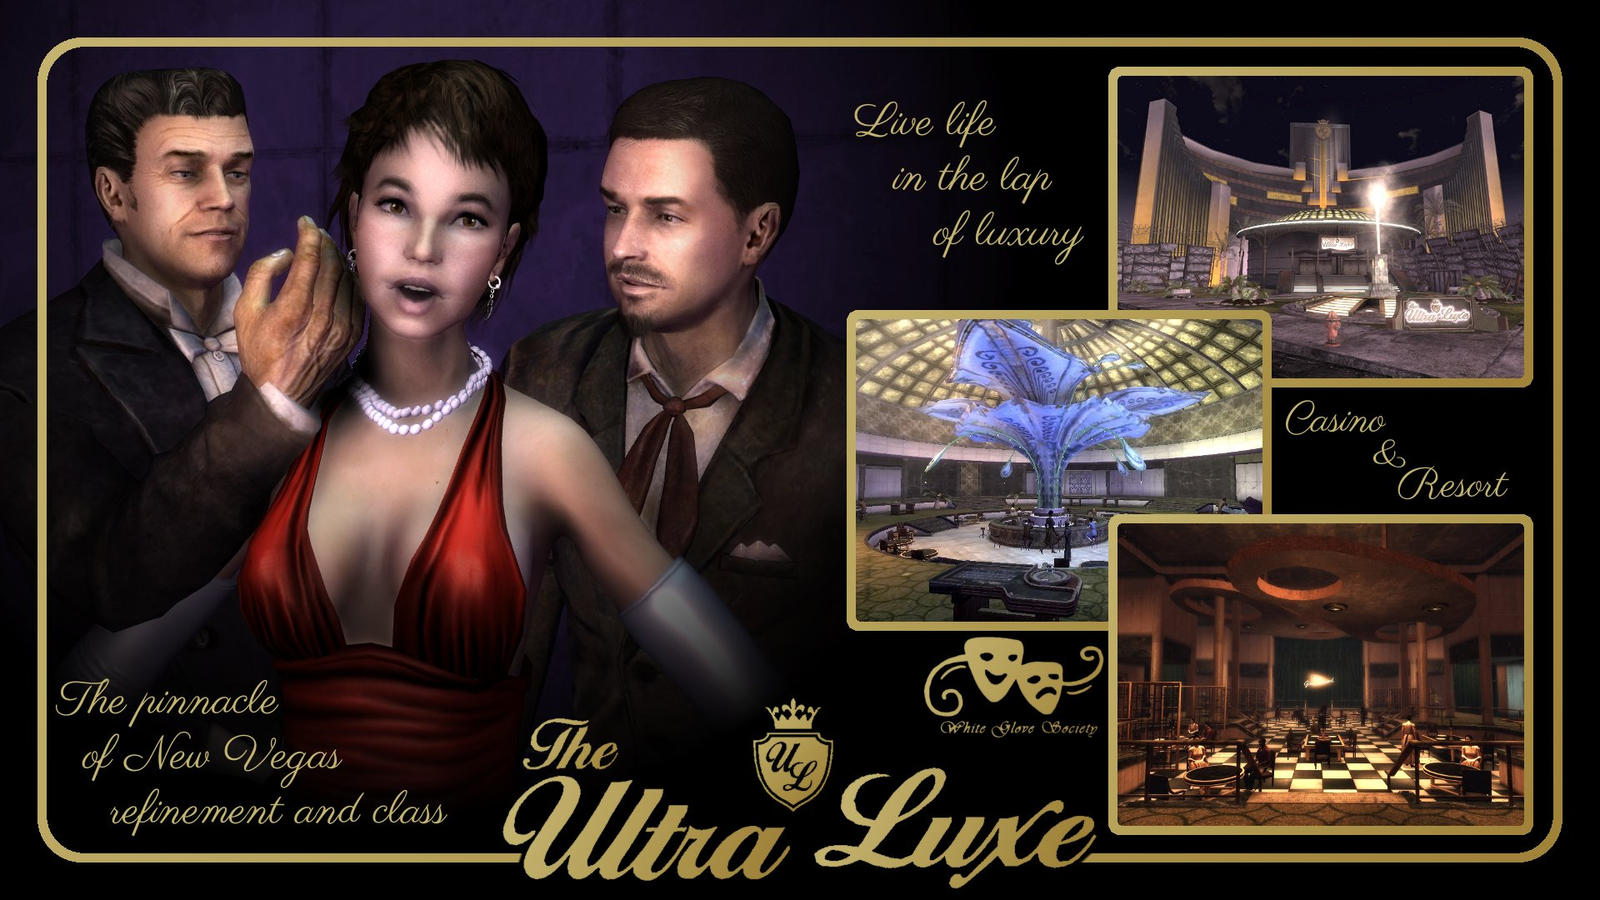 Ultra Luxe Casino by capmac on DeviantArt